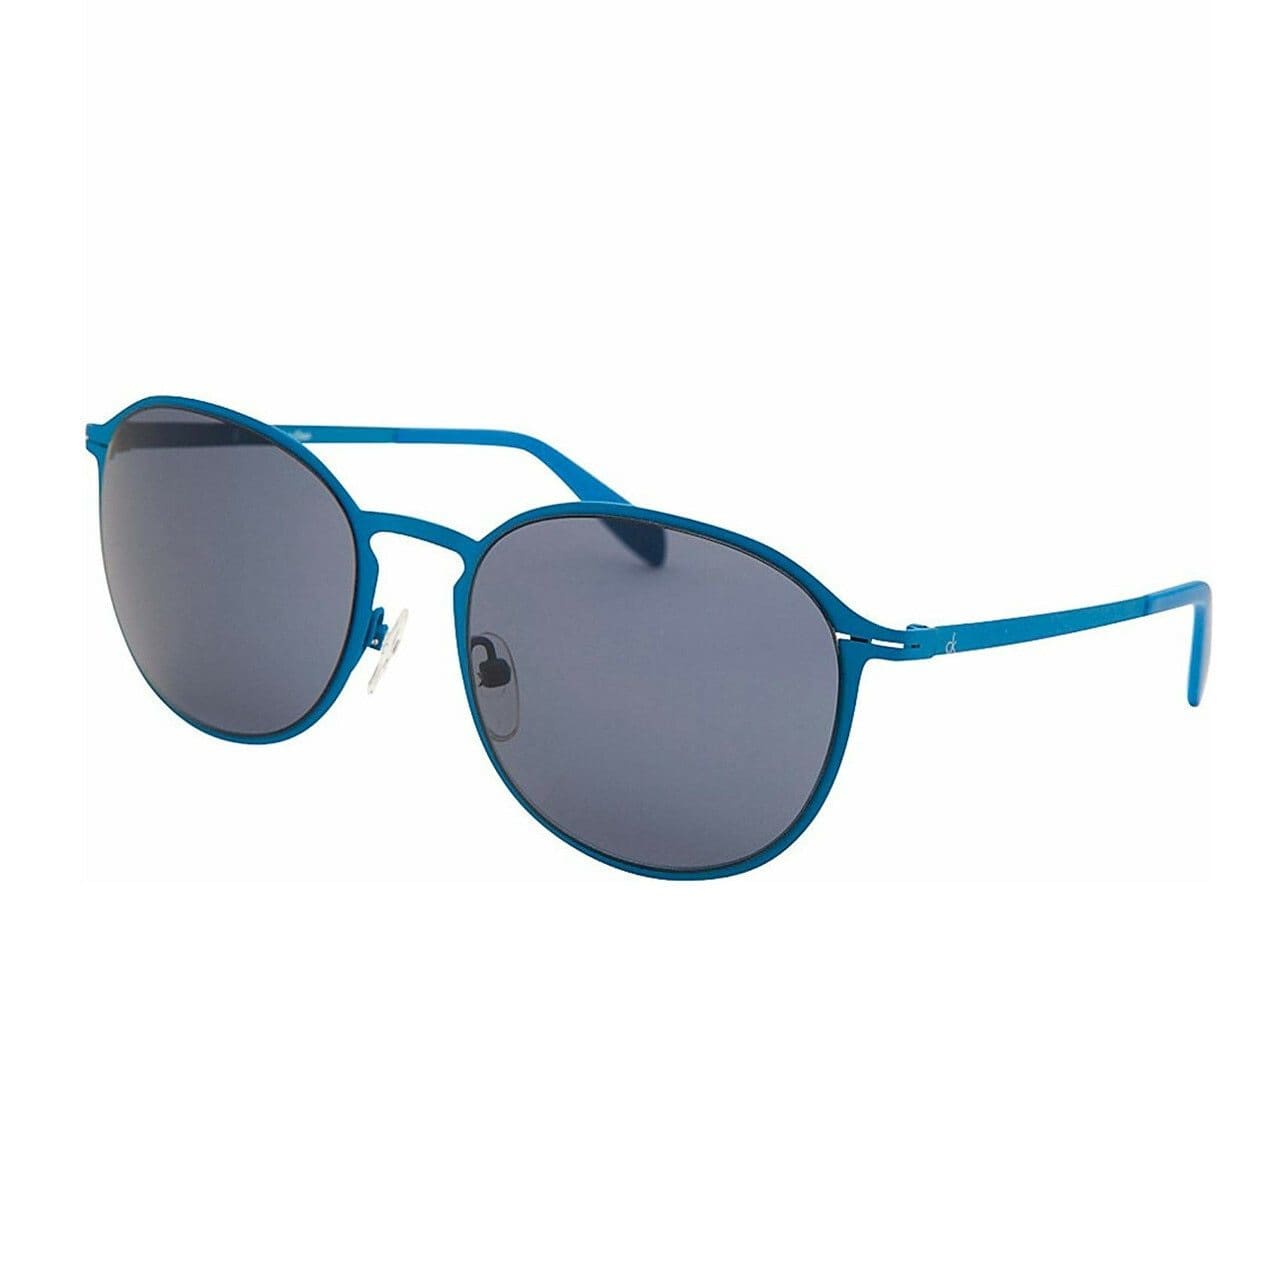 Calvin Klein CK2137S-243 Rubber Blue Round Sunglasses Frames for Men and Women 750779070154